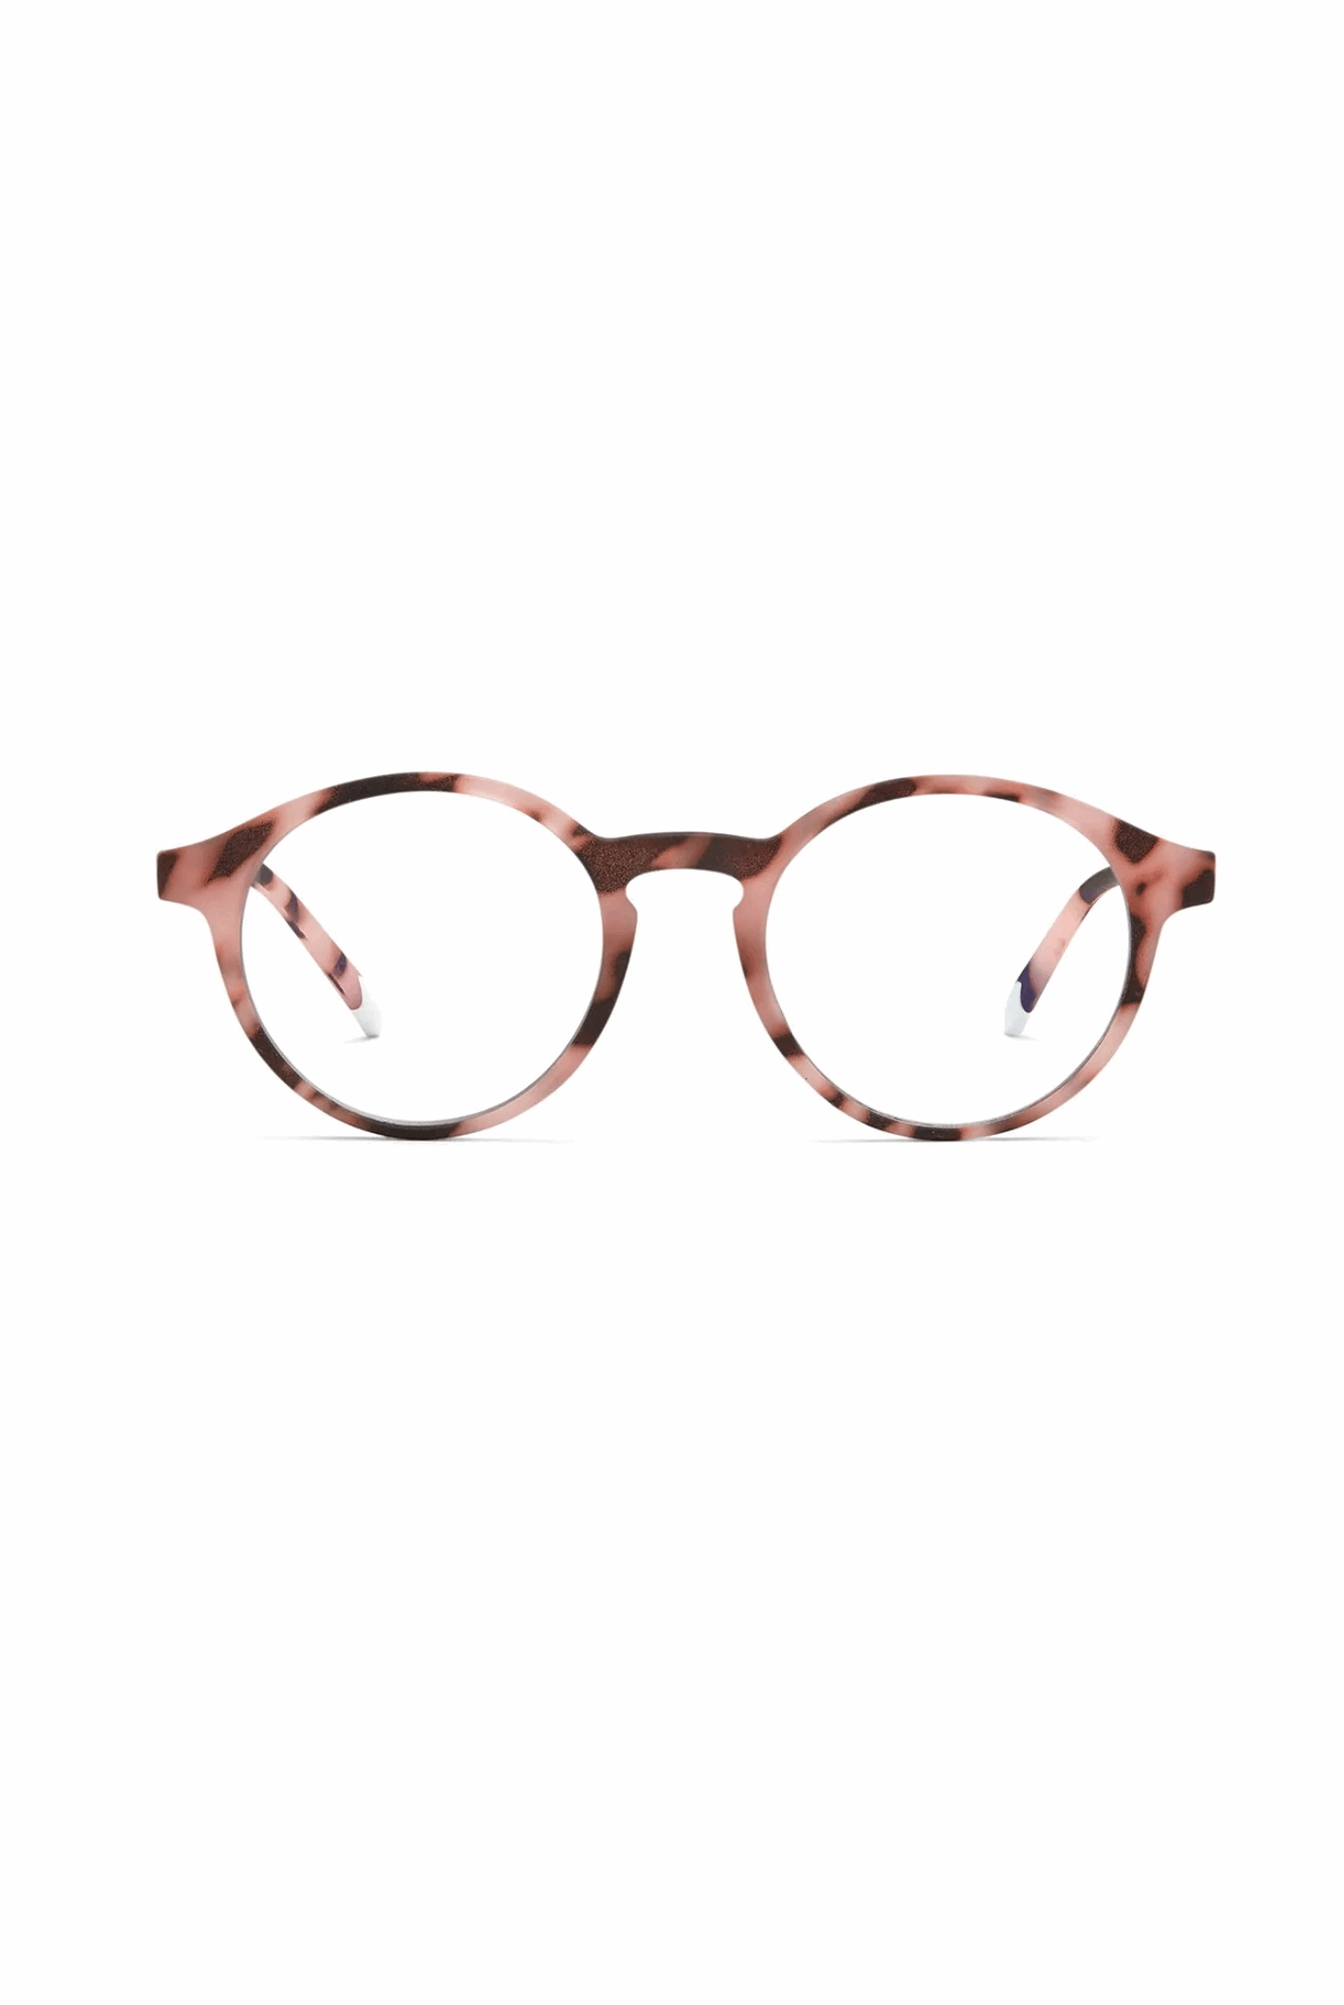 Barner - LE MARAIS - Neutral Glasses